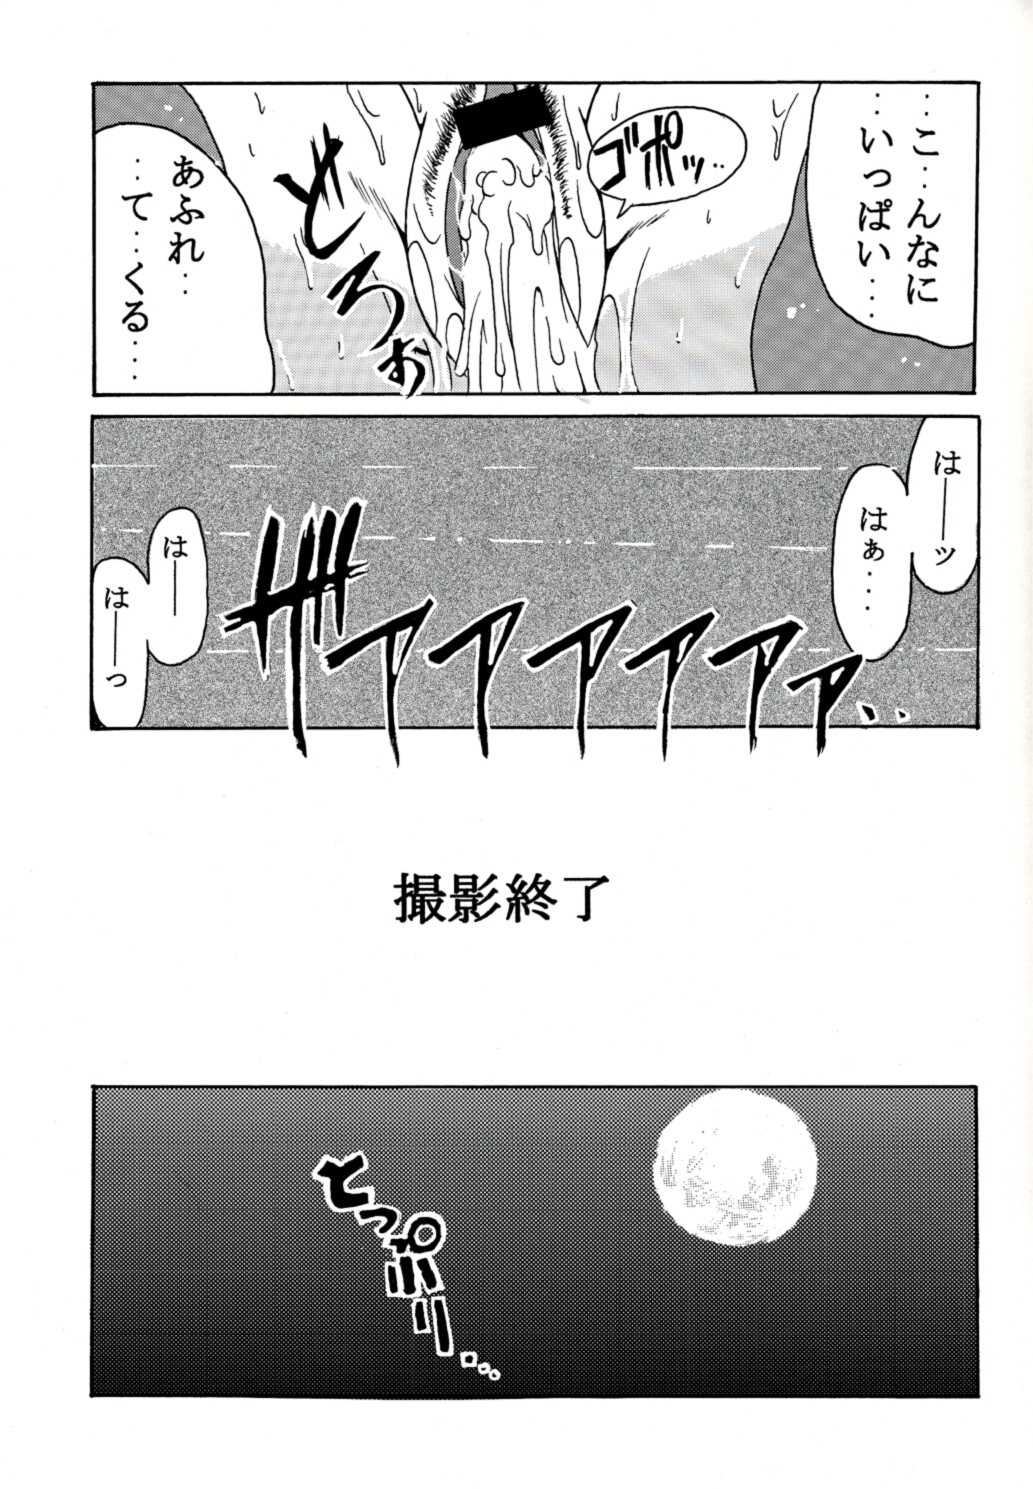 [BIG BOSS] Kagura Mania (Azumanga-Daioh) [BIG BOSS] 神楽マニア (あずまんが大王)